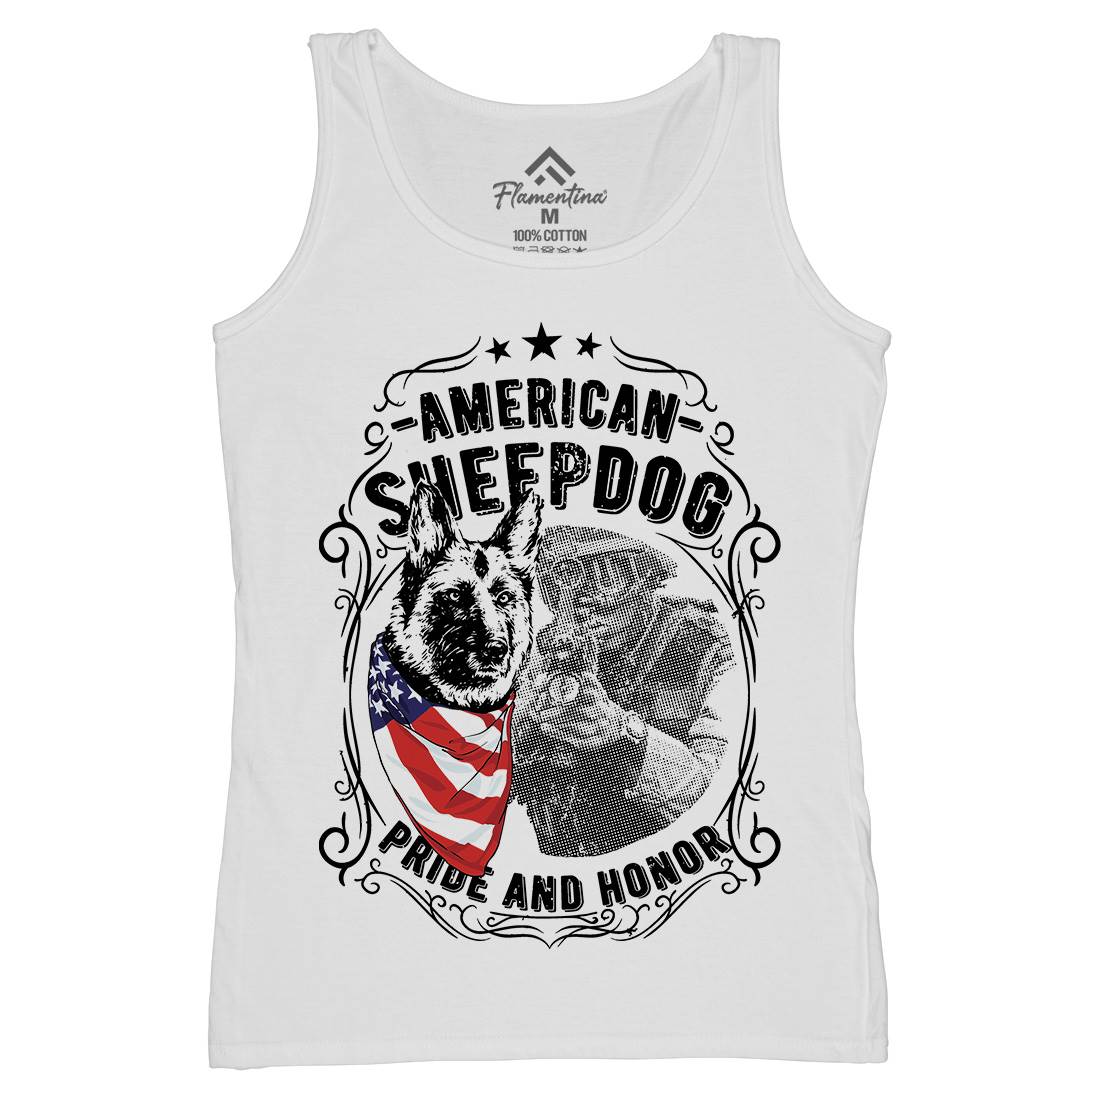 Sheepdog Womens Organic Tank Top Vest American C904